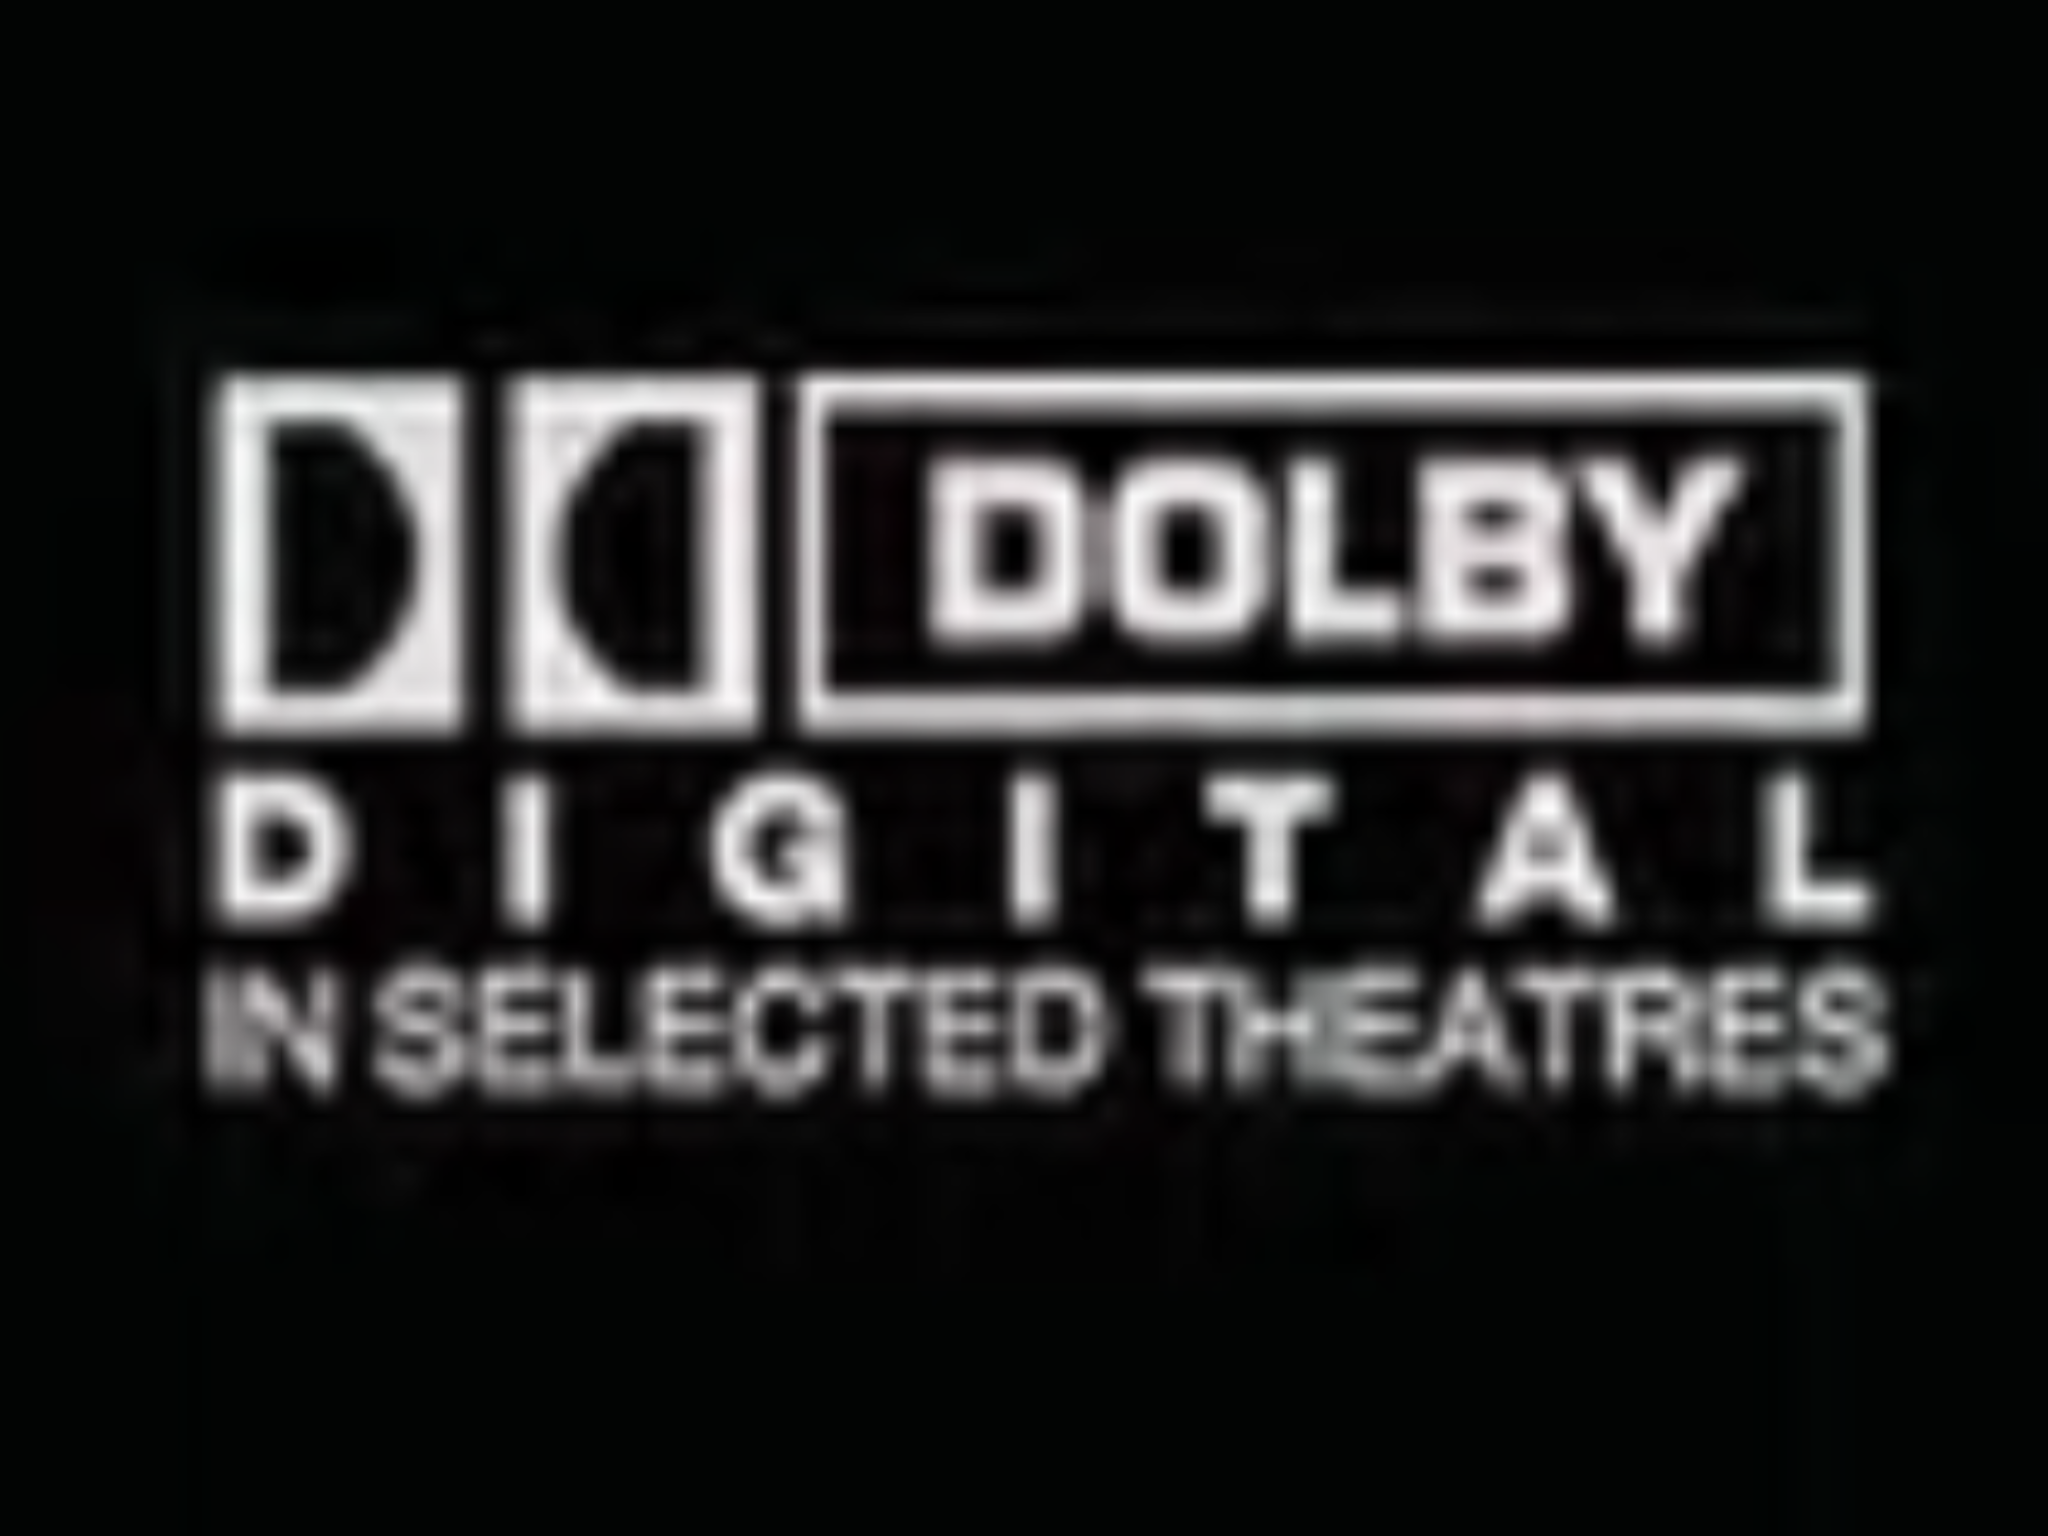 dolby digital logo